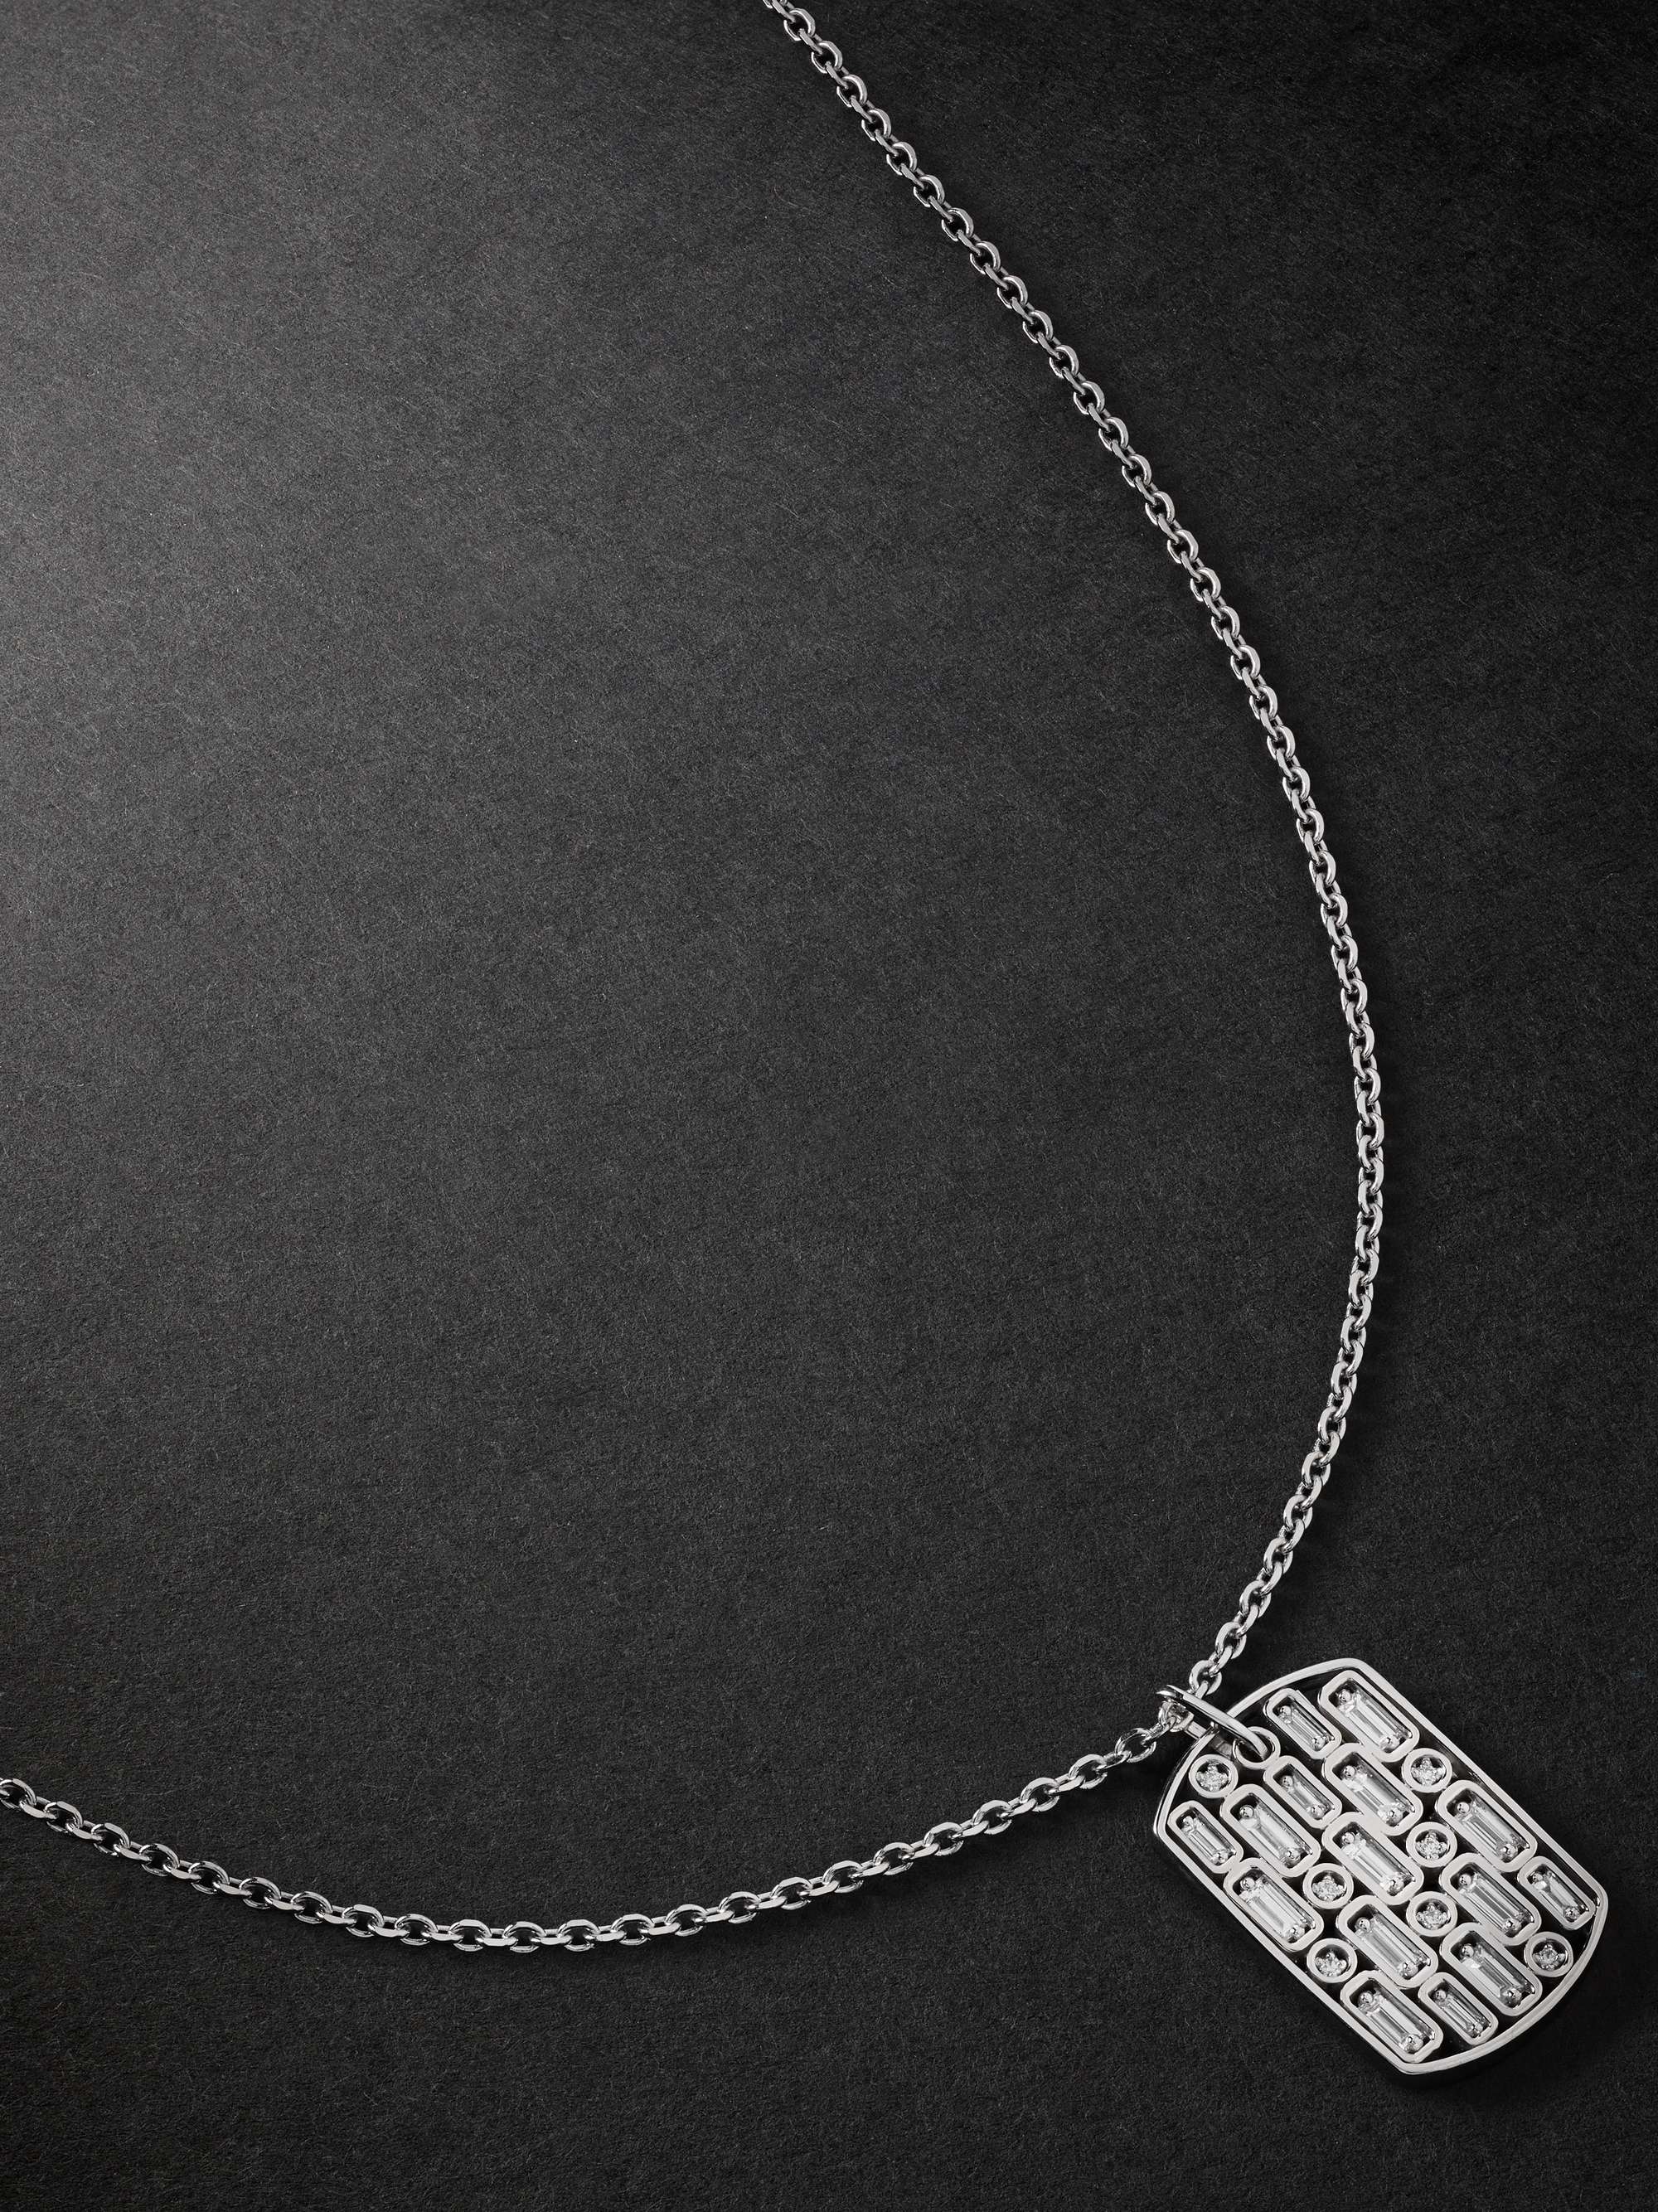 SUZANNE KALAN White Gold Diamond Pendant Necklace